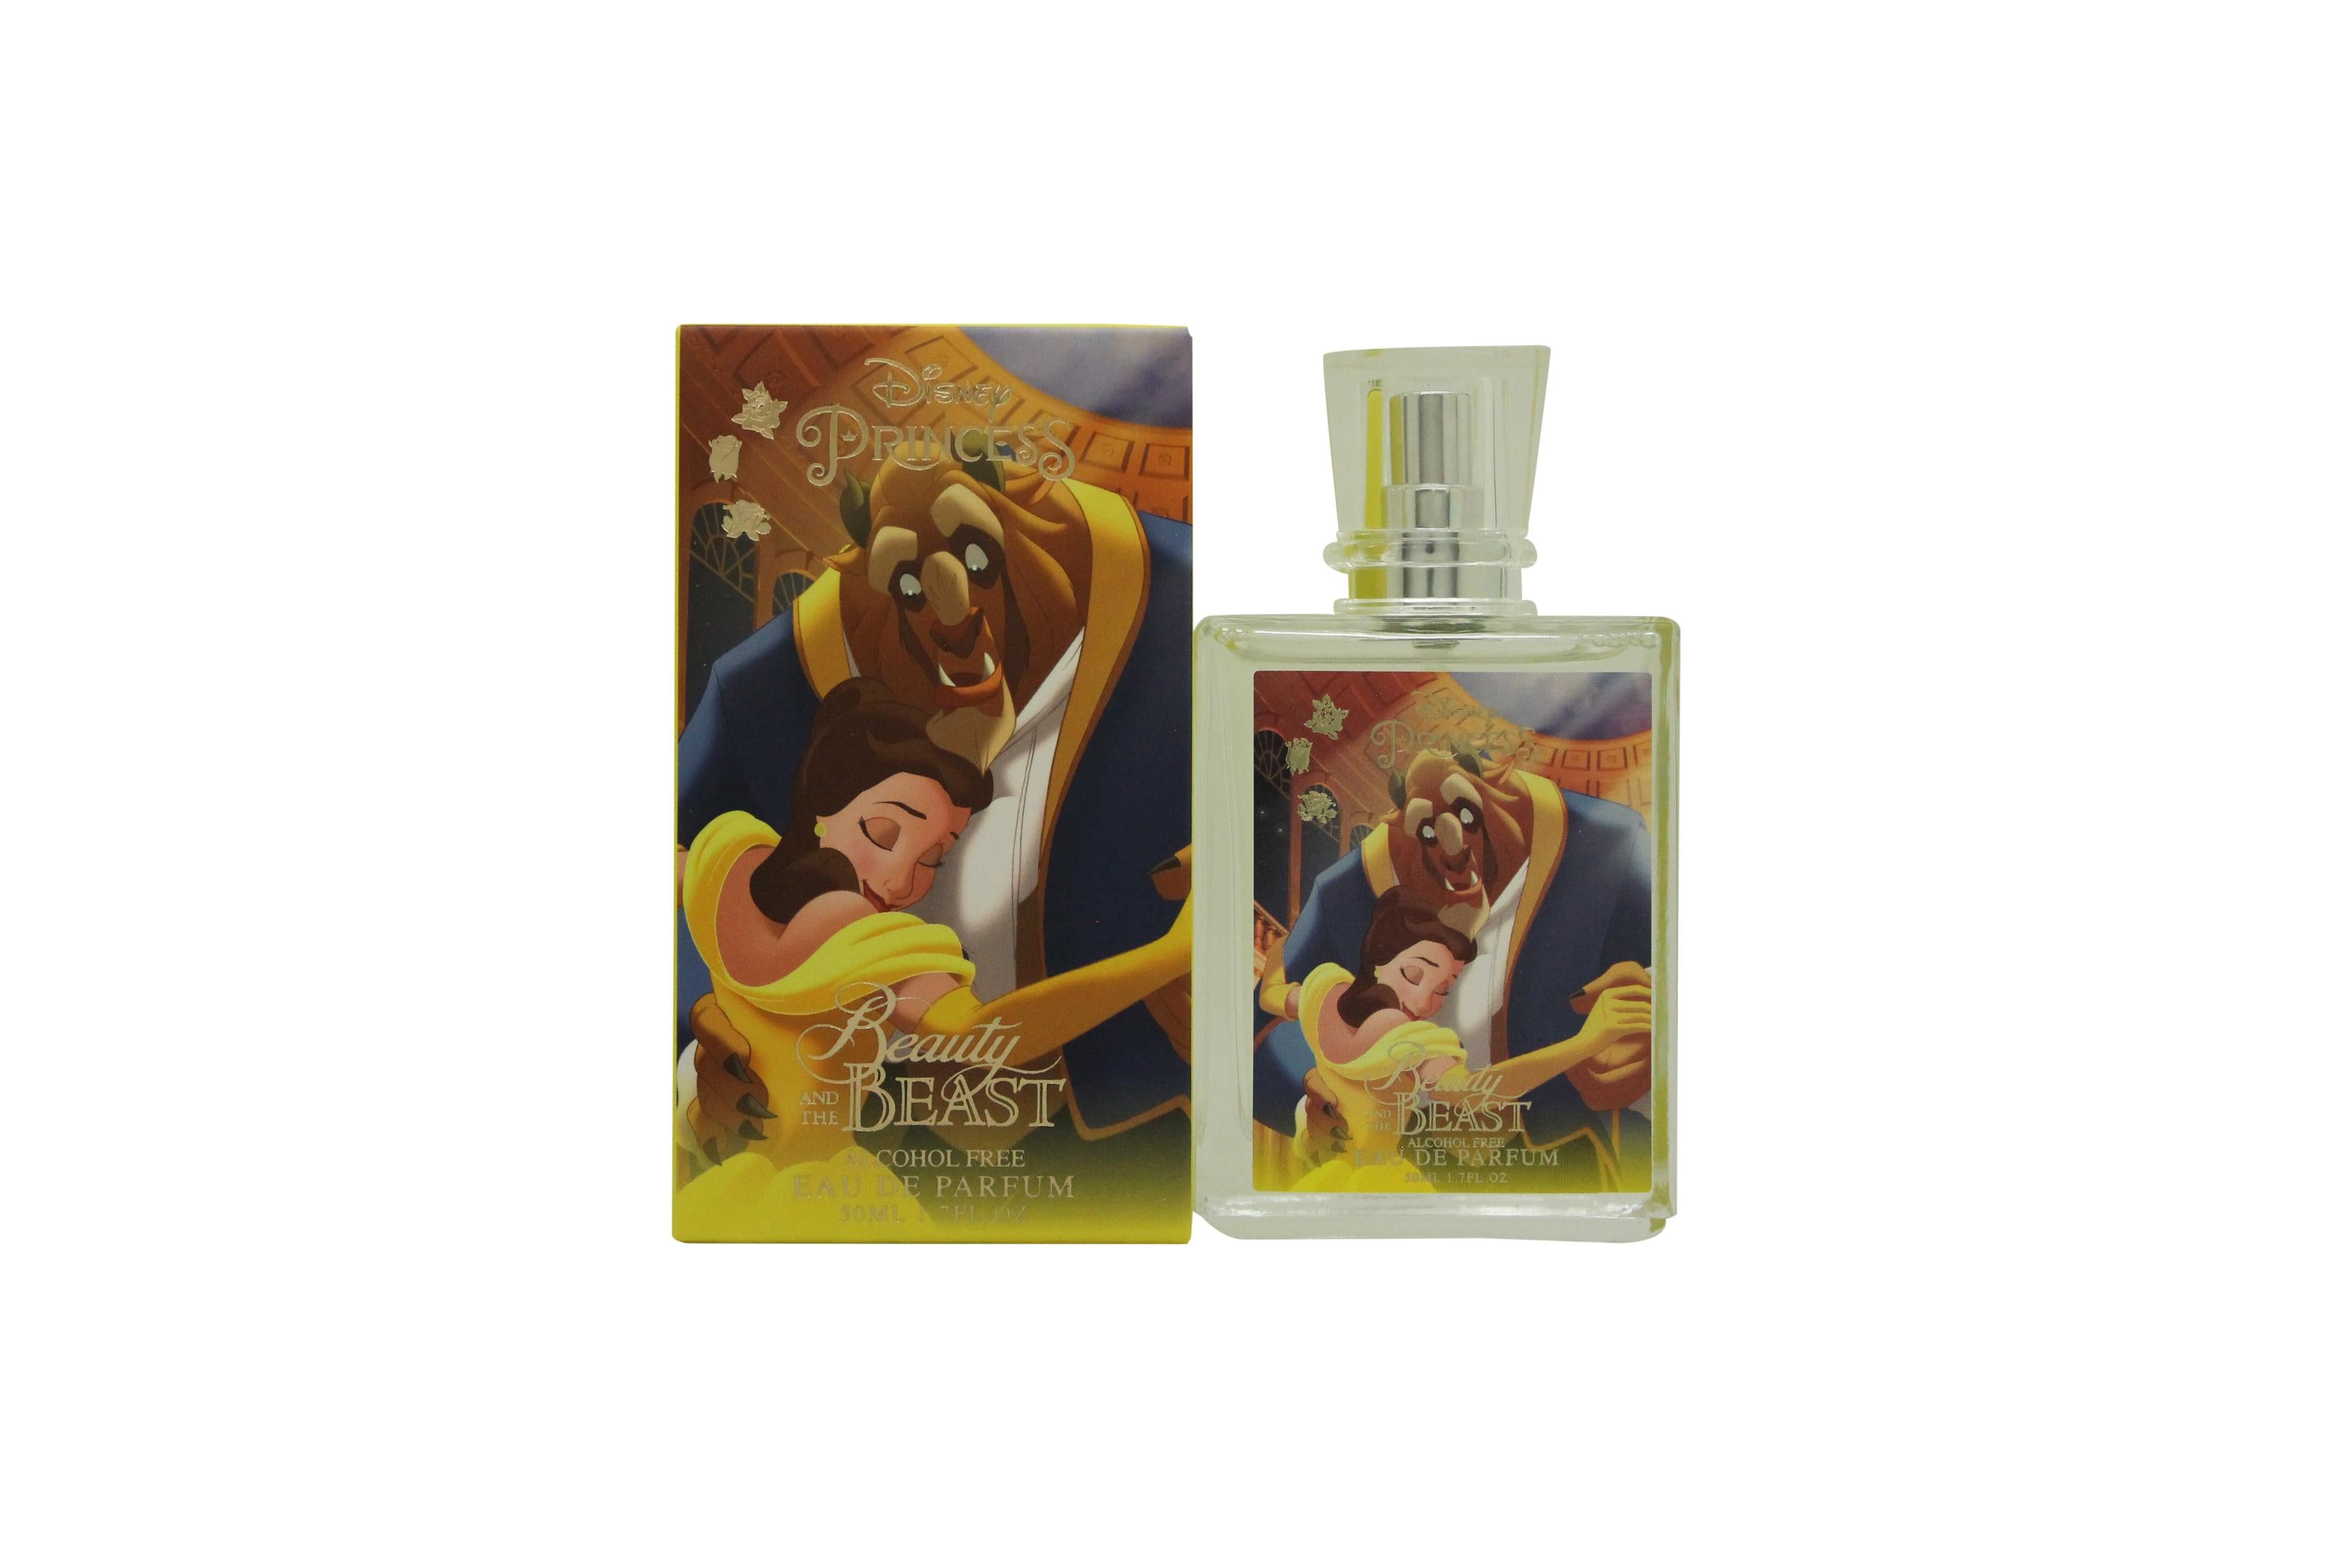 View Disney Beauty And The Beast Eau de Parfum 50ml Spray information